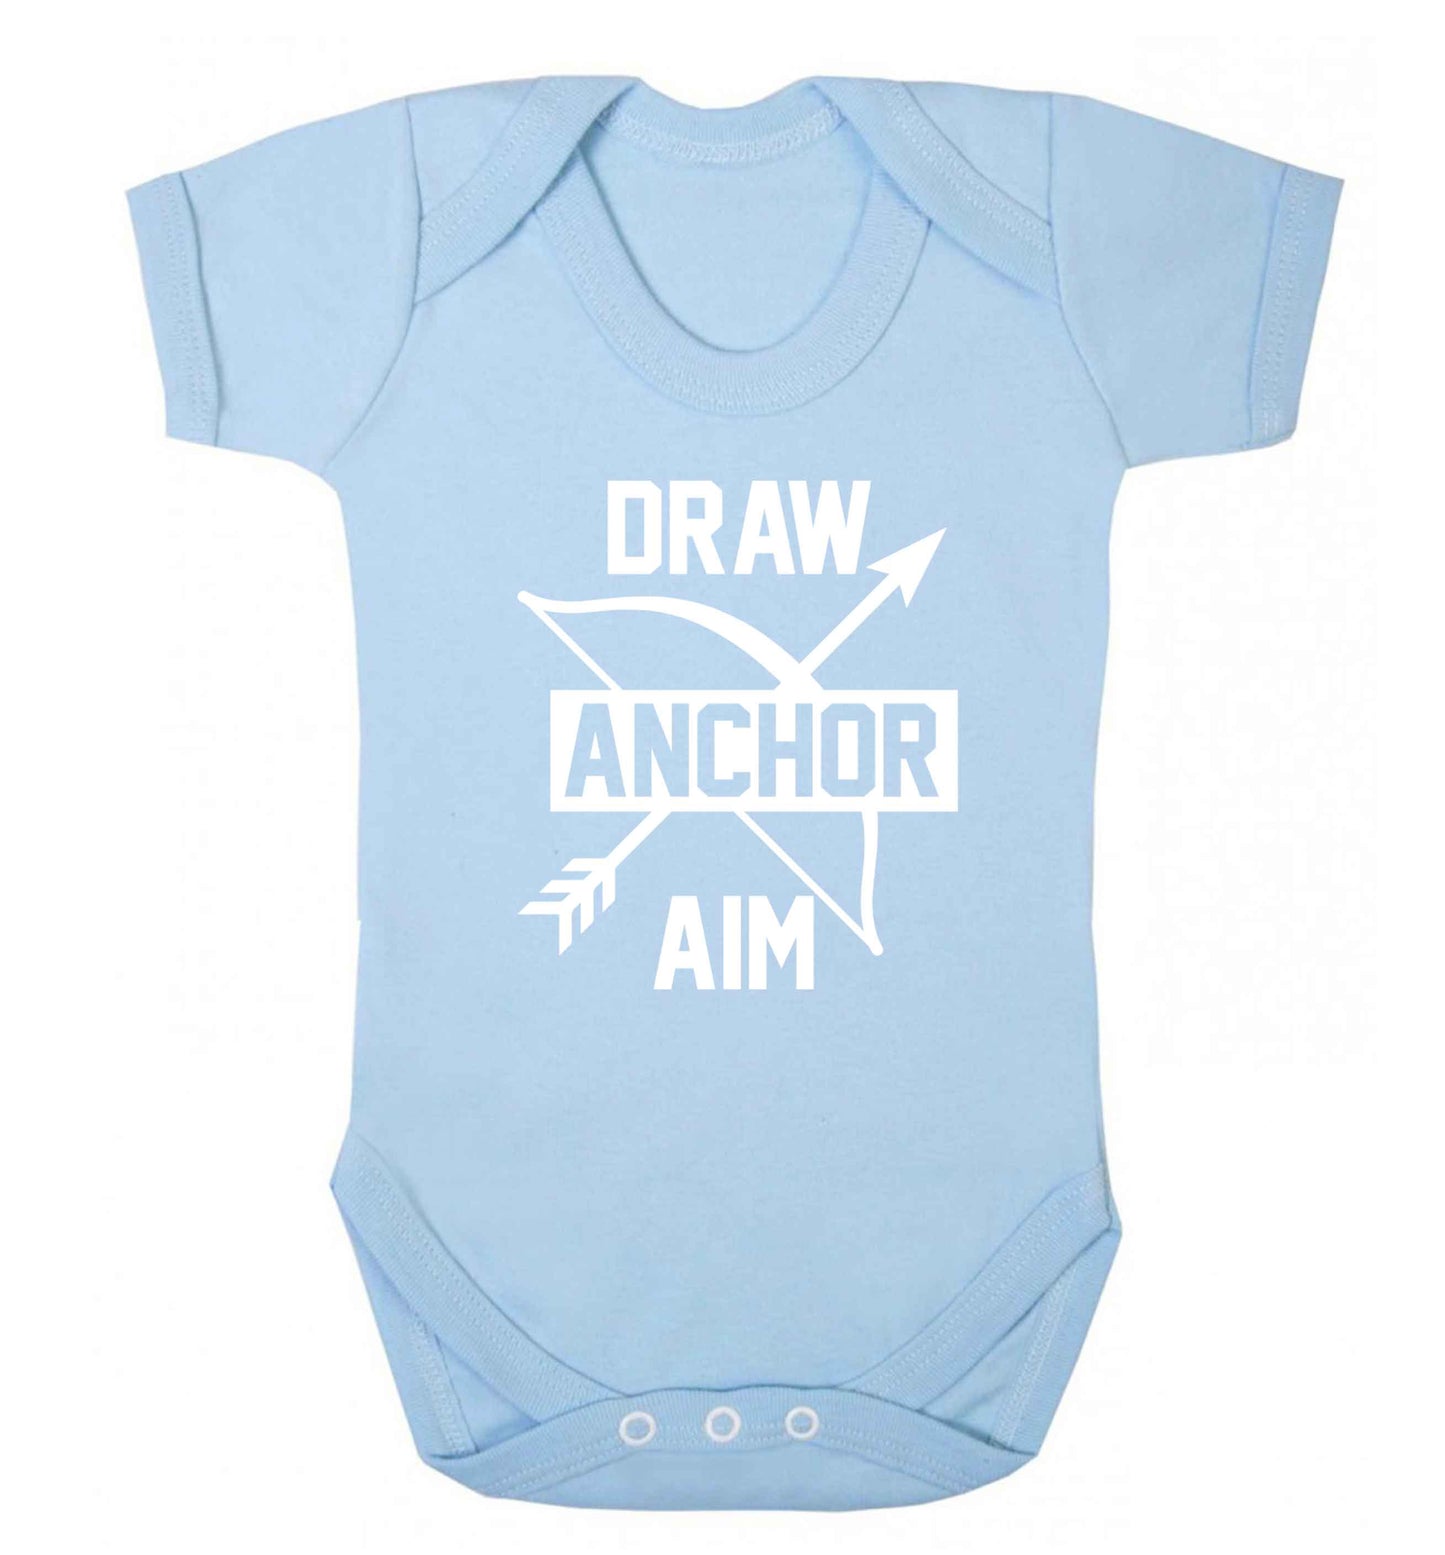 Draw anchor aim Baby Vest pale blue 18-24 months